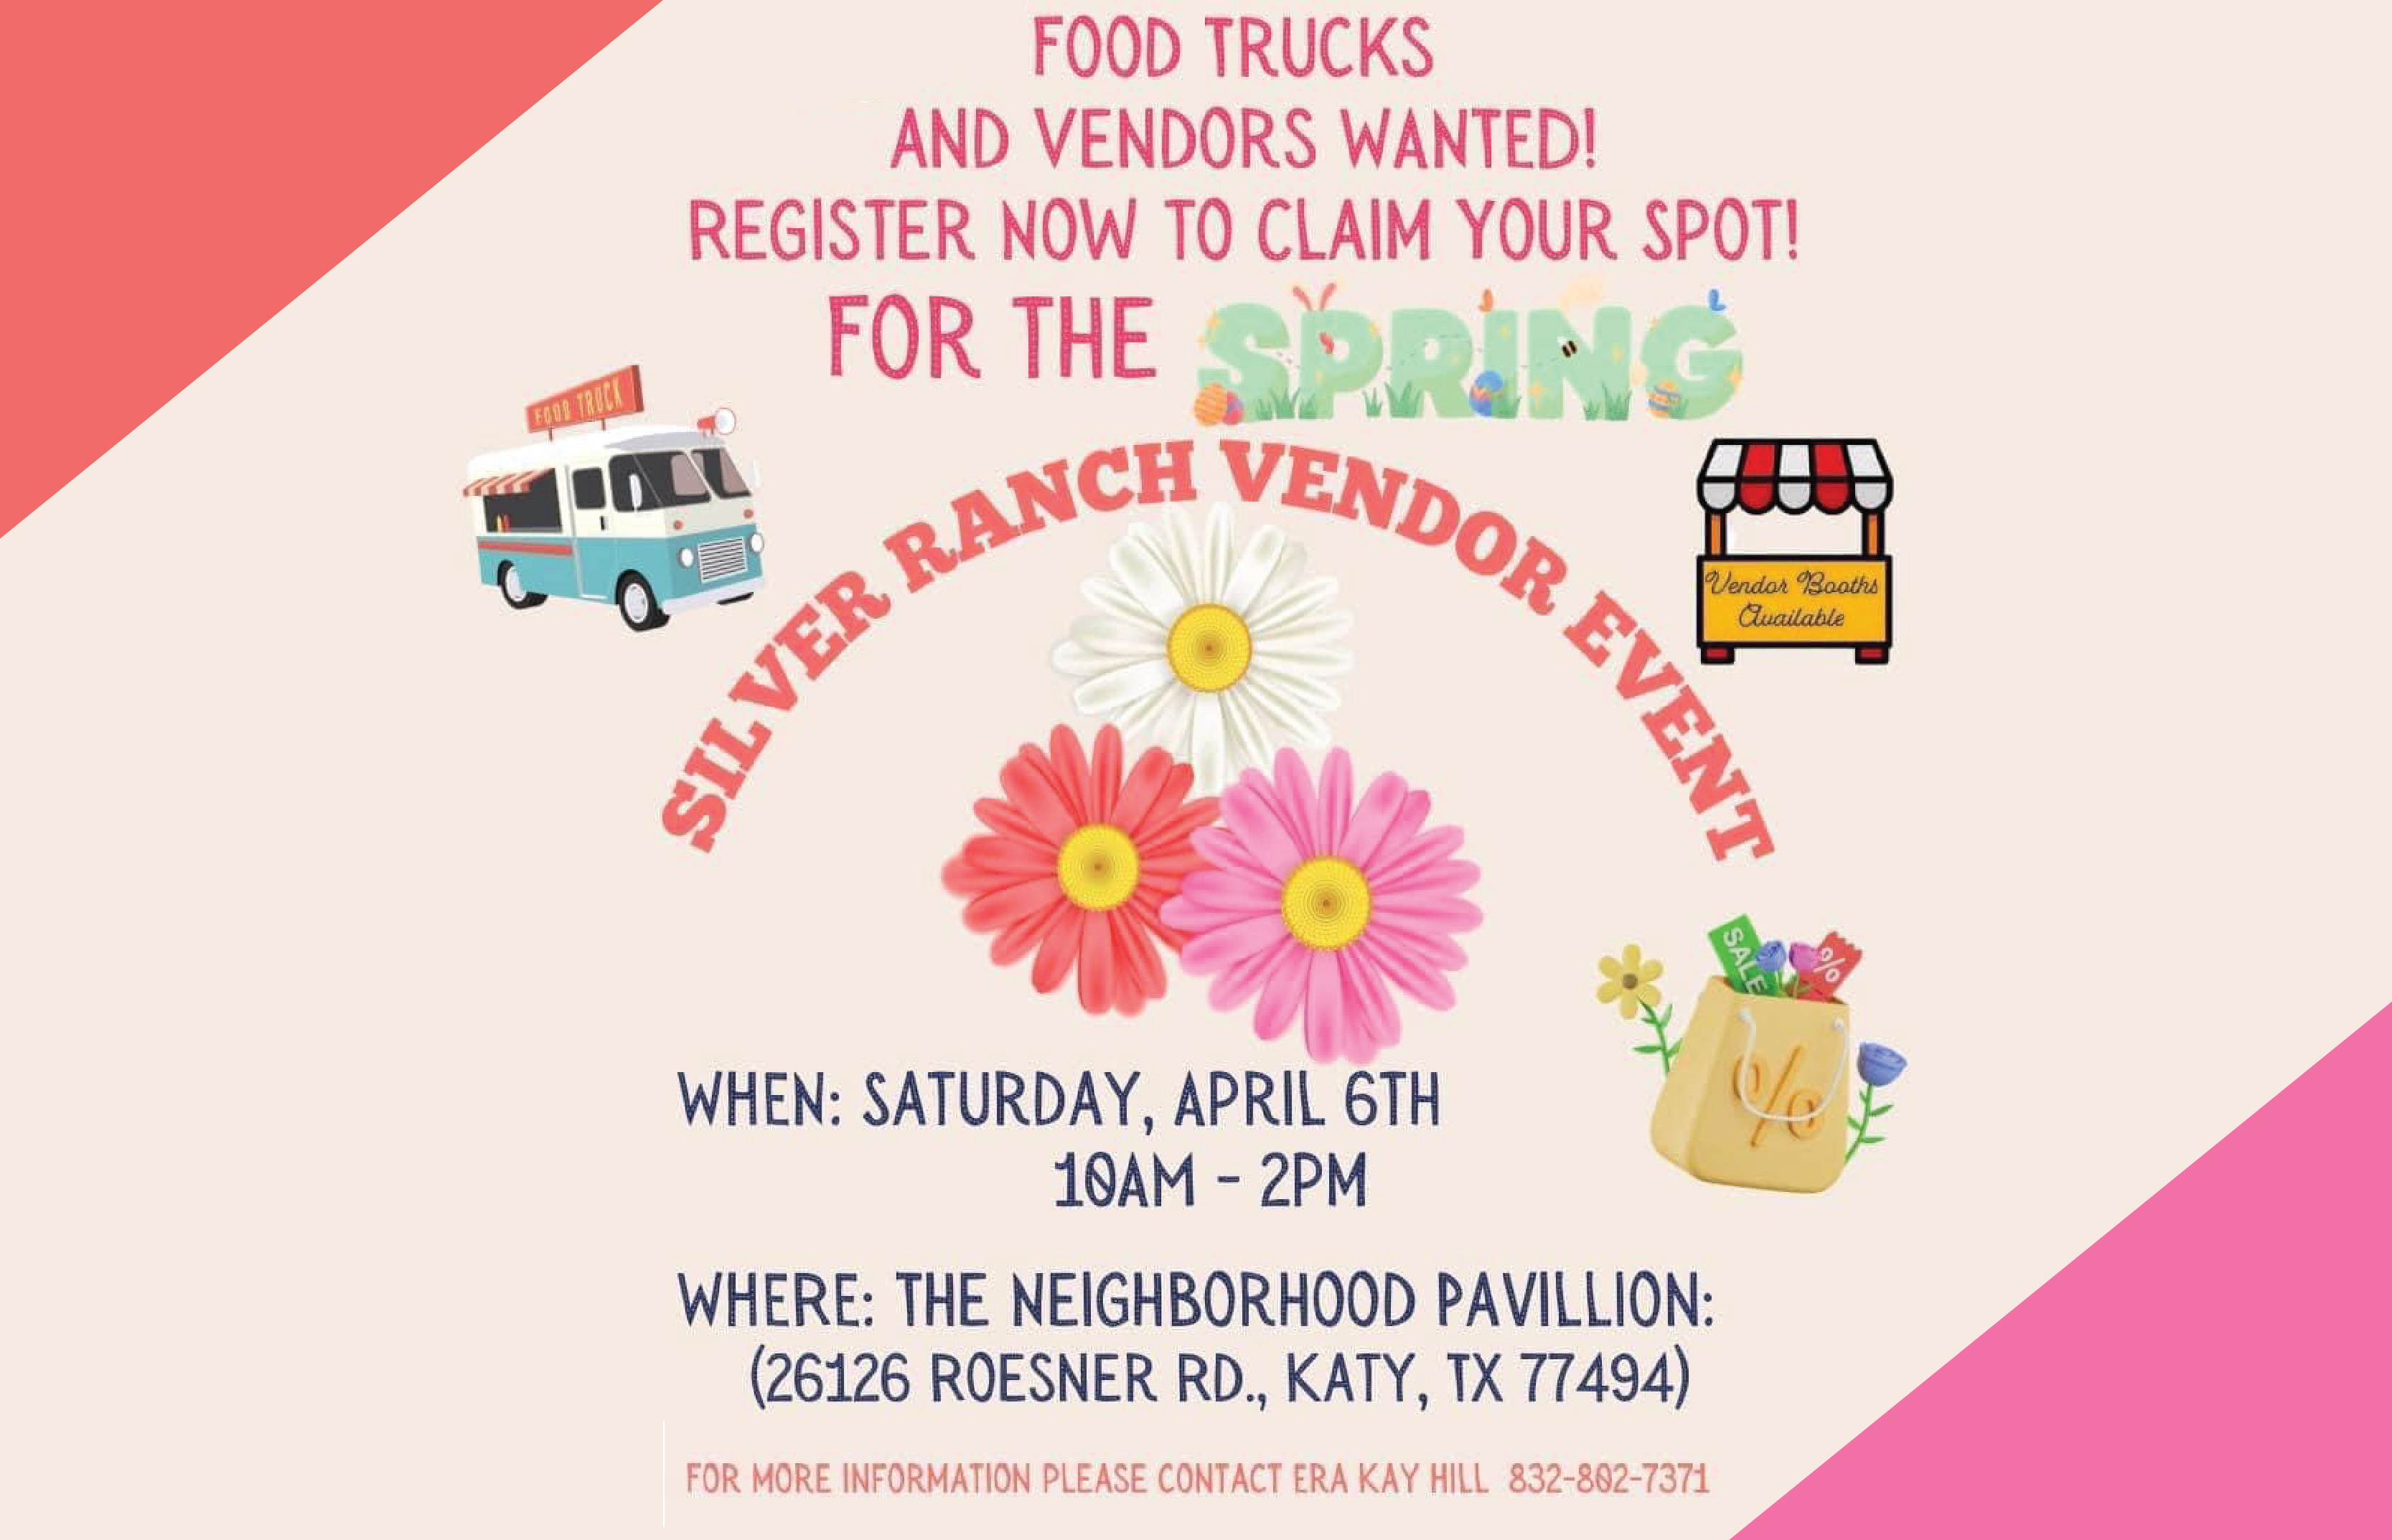 Registration Open for the Spring Silver Ranch Vendor Market